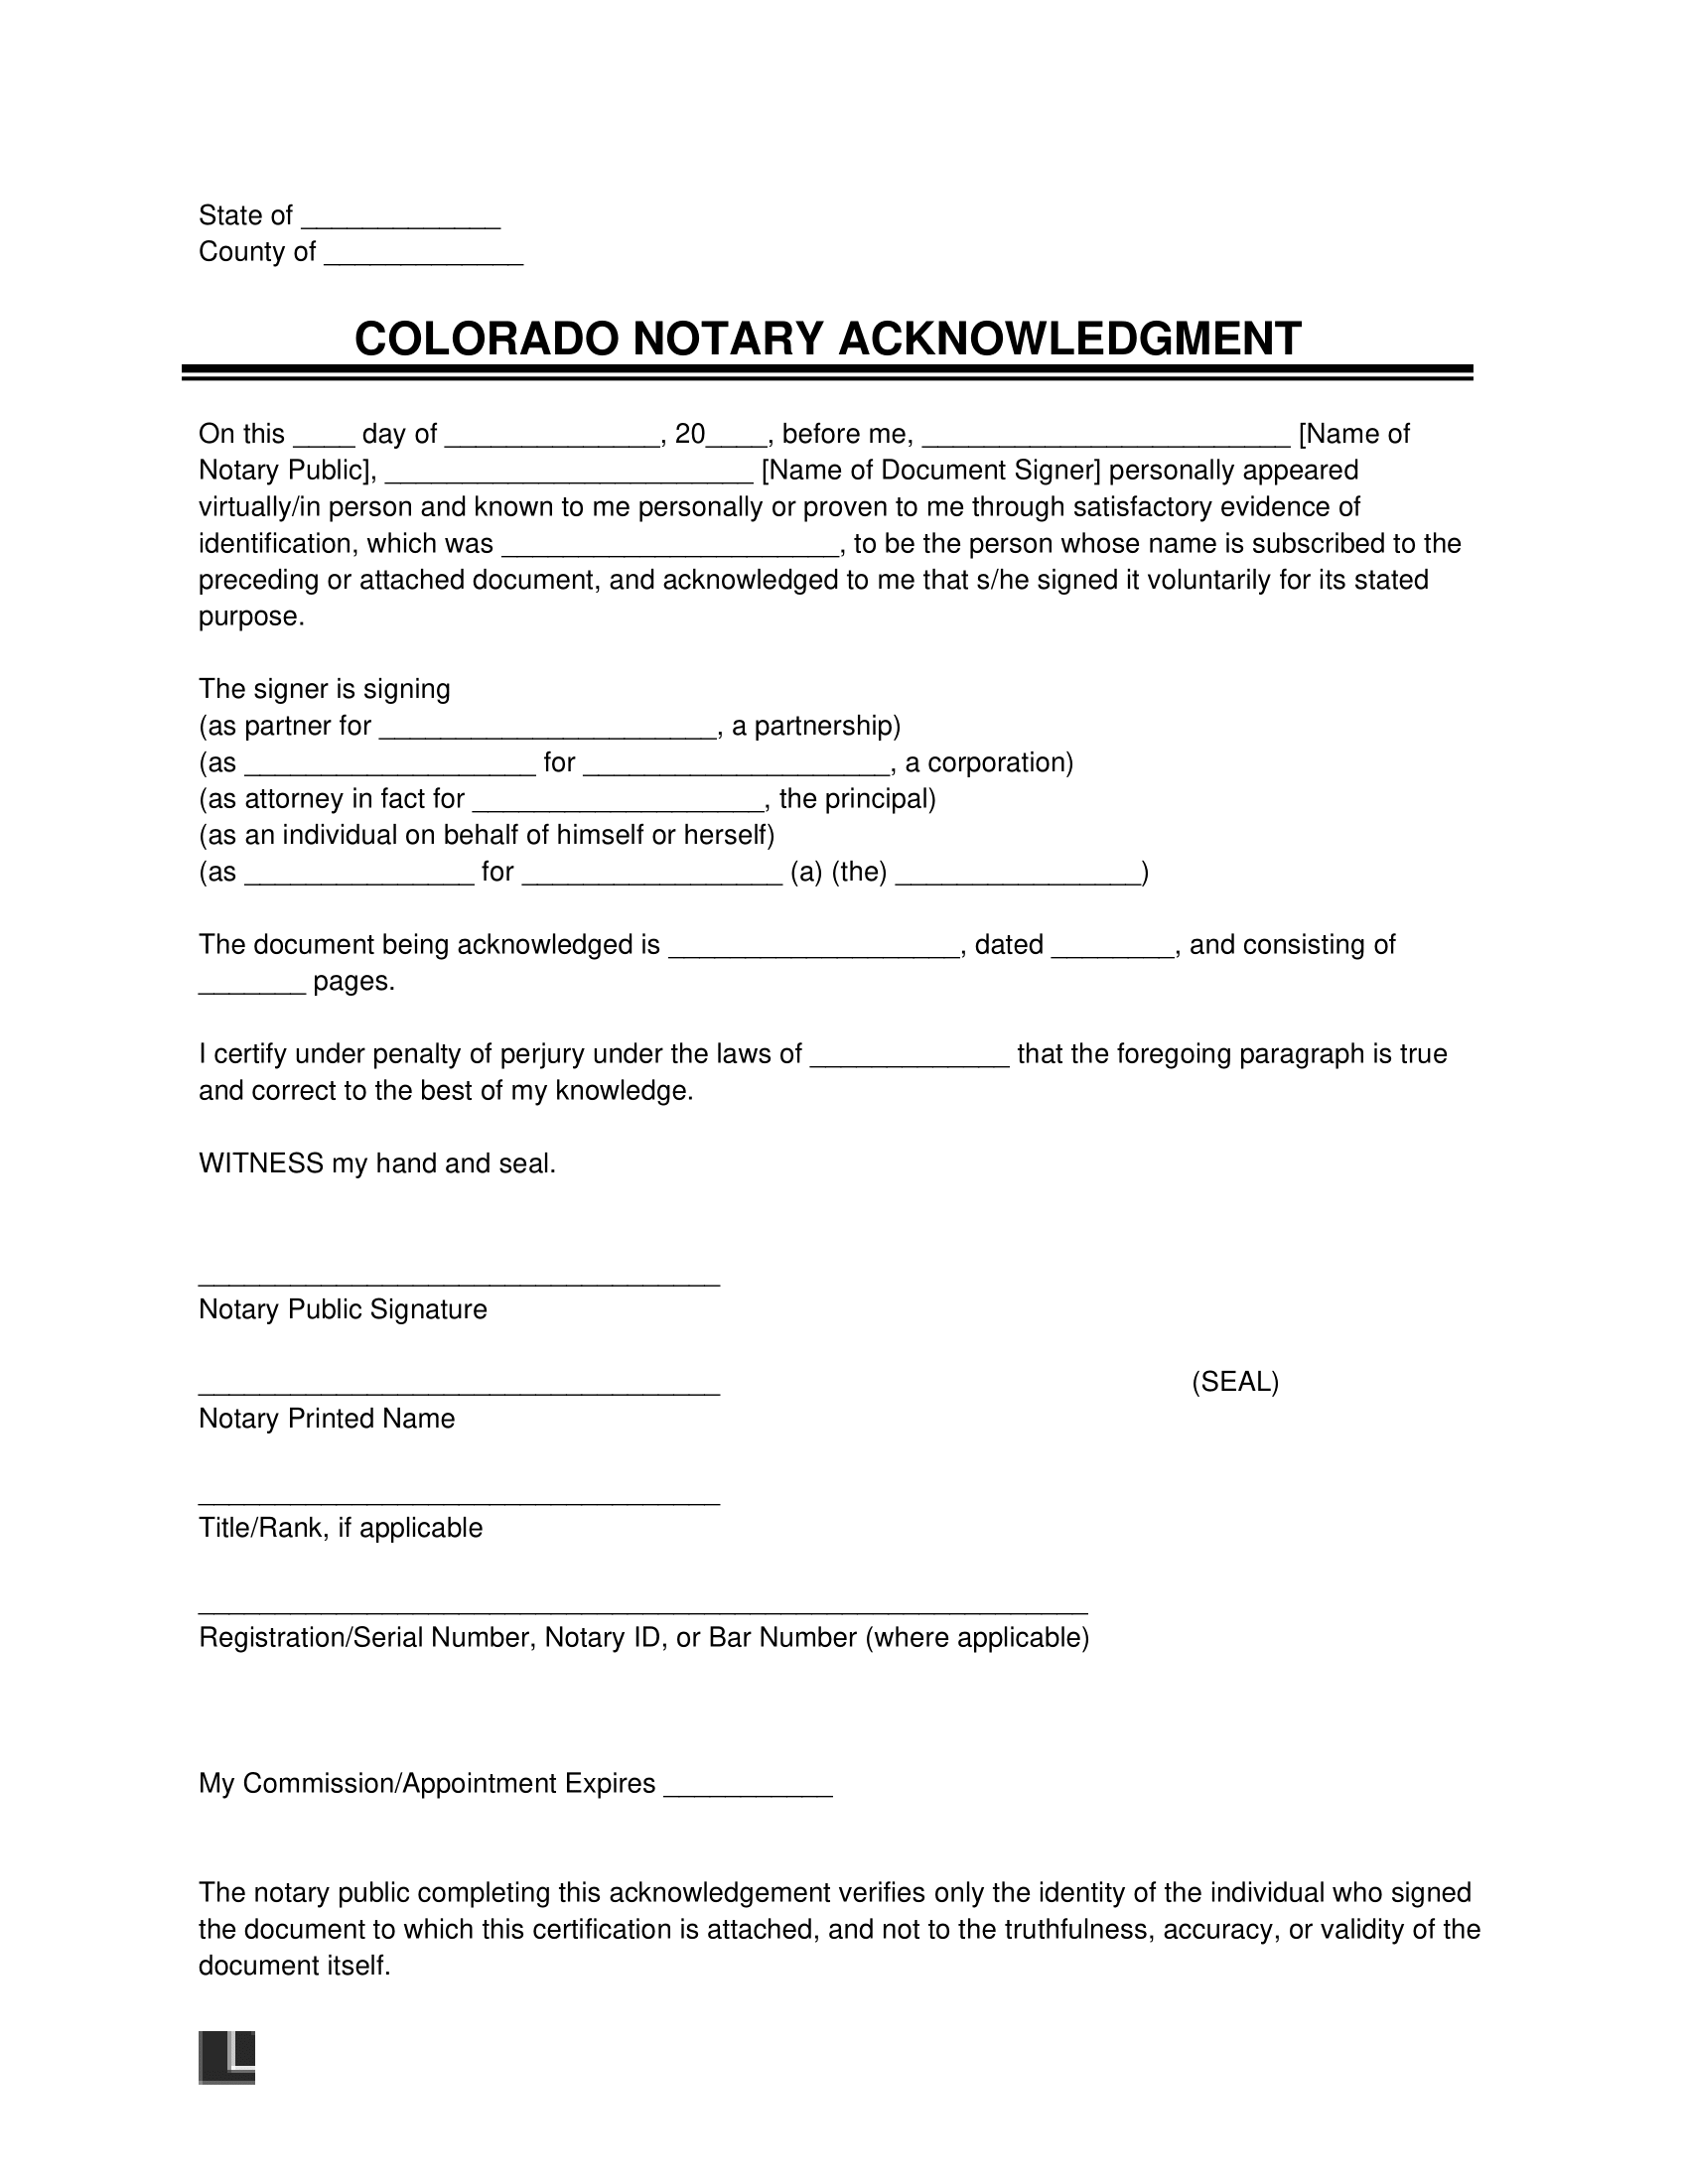 Colorado Notary Acknowledgment Form